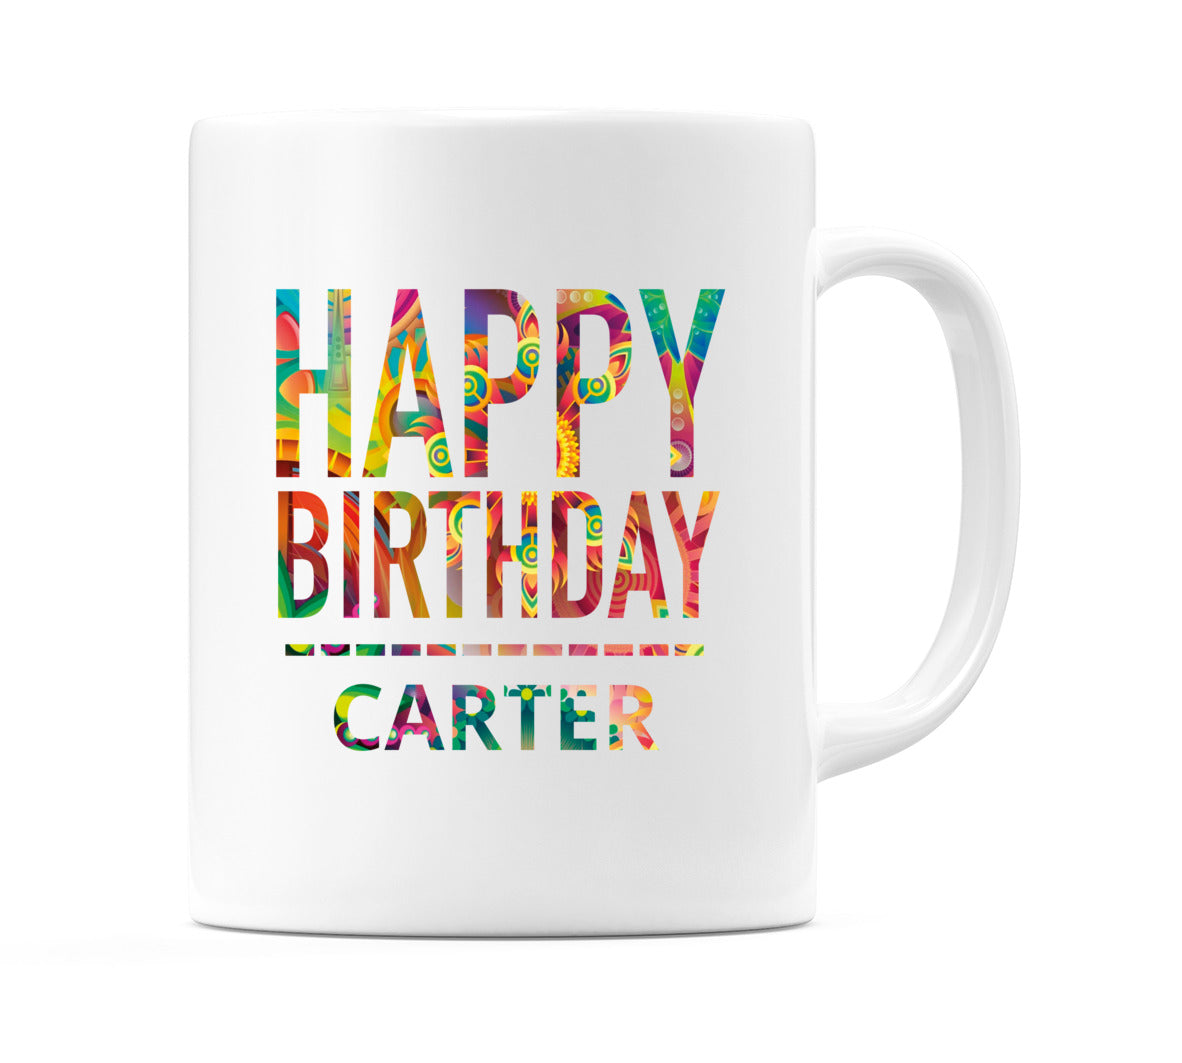 Happy Birthday Carter (Tie Dye Effect) Mug Cup by WeDoMugs